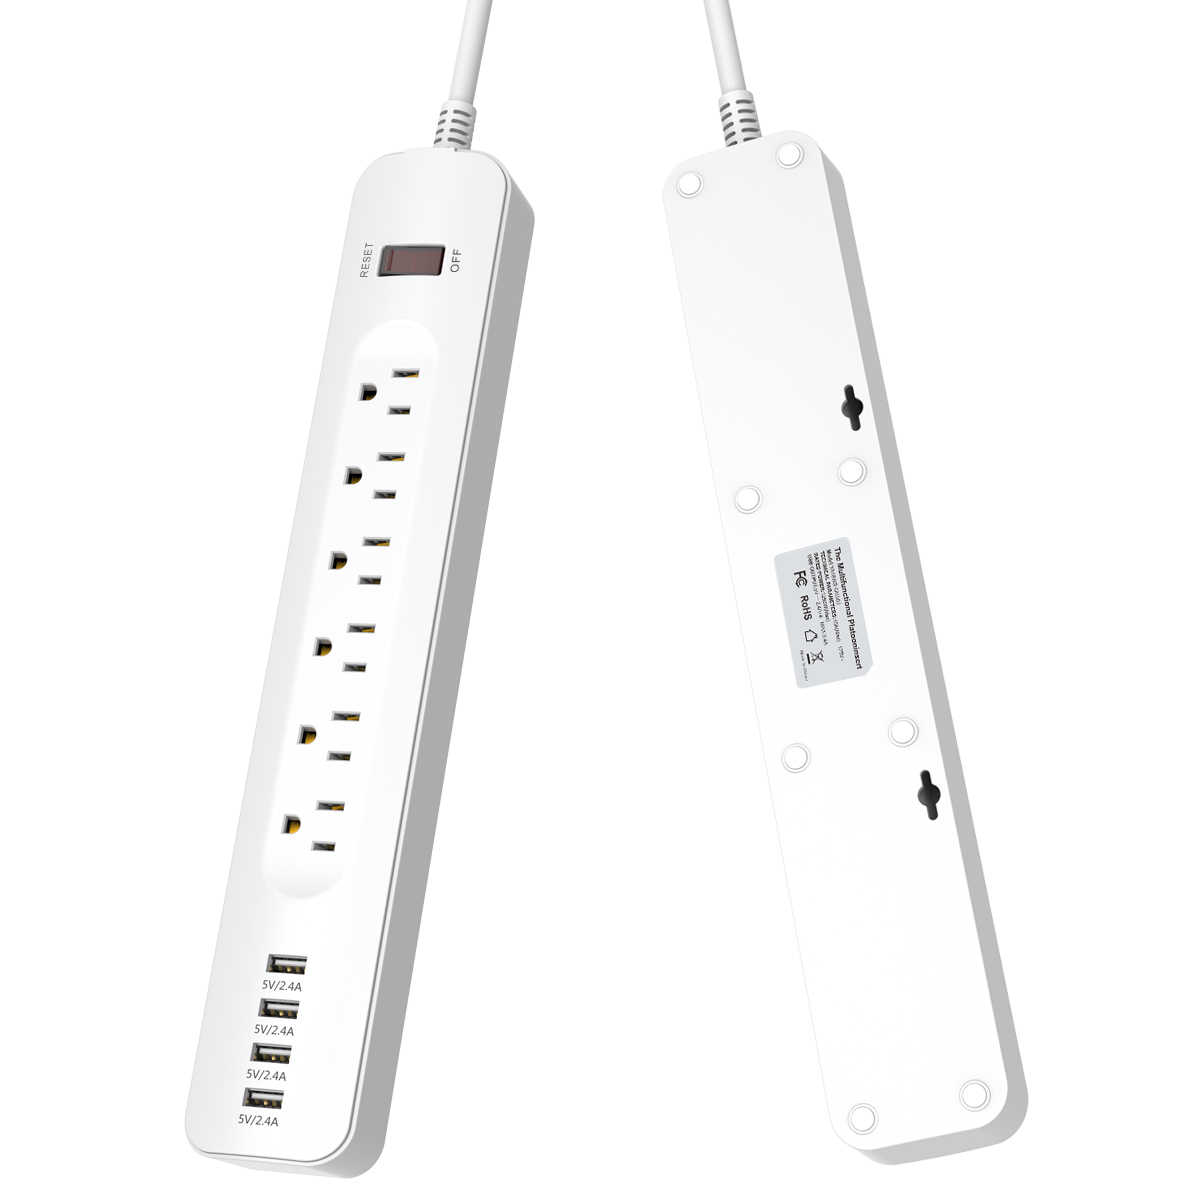 ELEGIANT-Smart-Charging-Socket-6-Position-4-USB-Charging-Port-For-iPhone-12-Pro-Max-For-Samsung-Gala-1890744-1